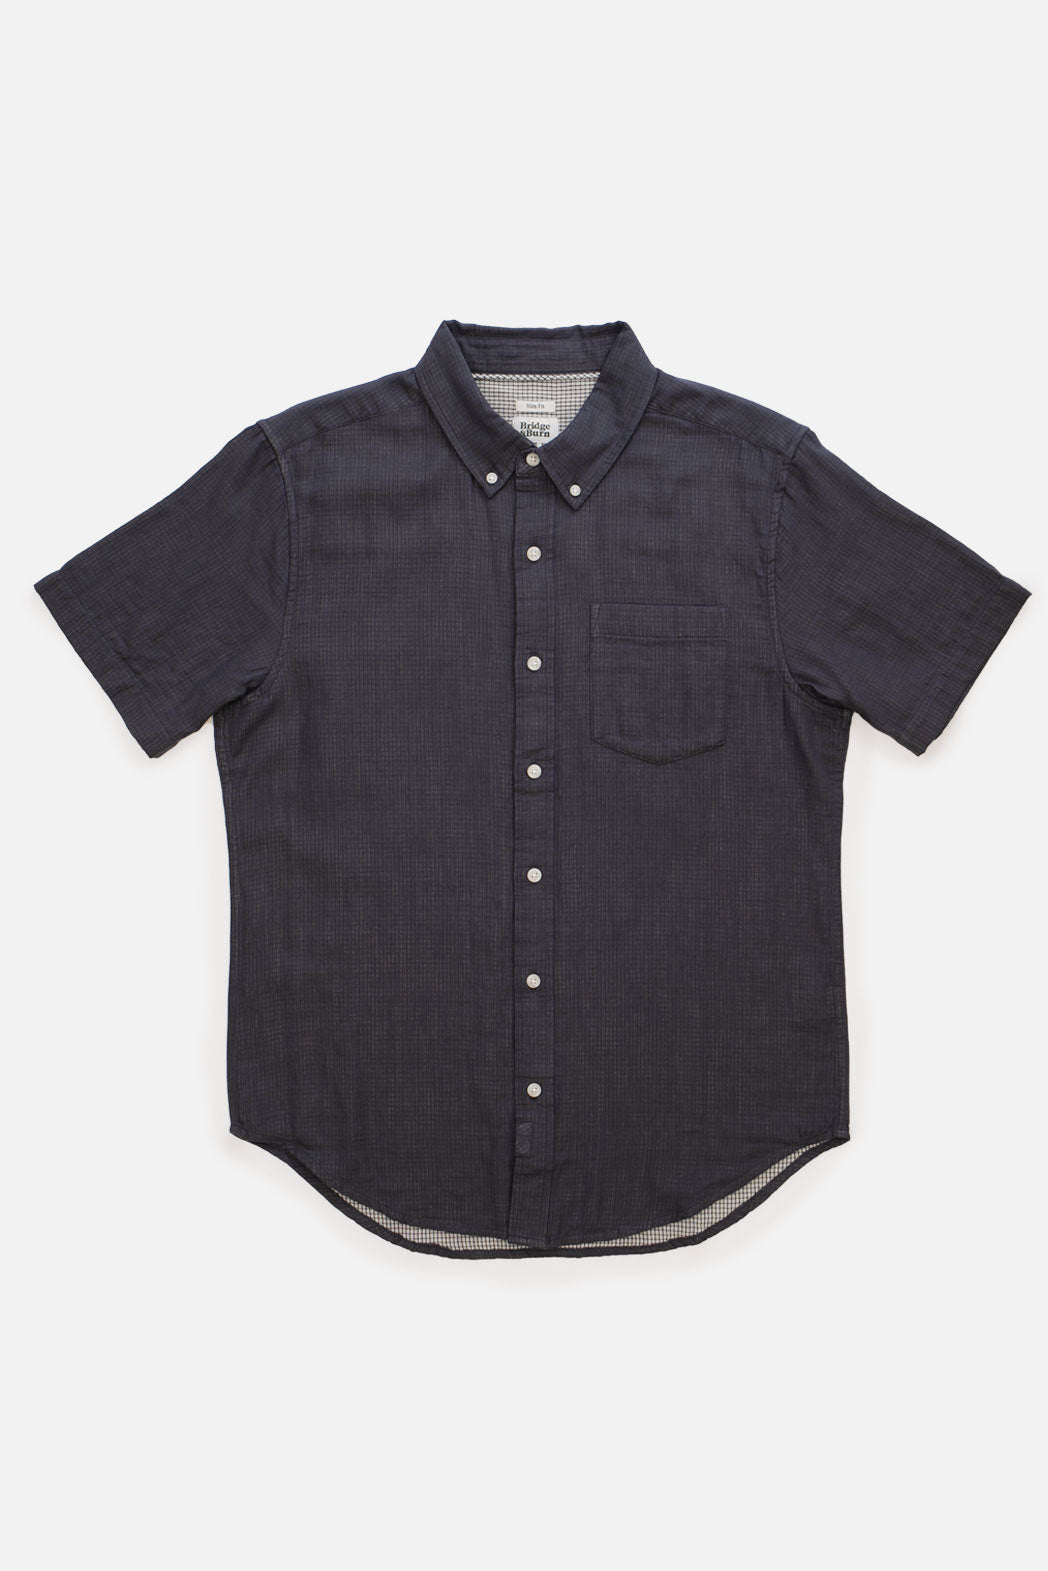 Jordan Slim Shirt / Charcoal Doublecloth